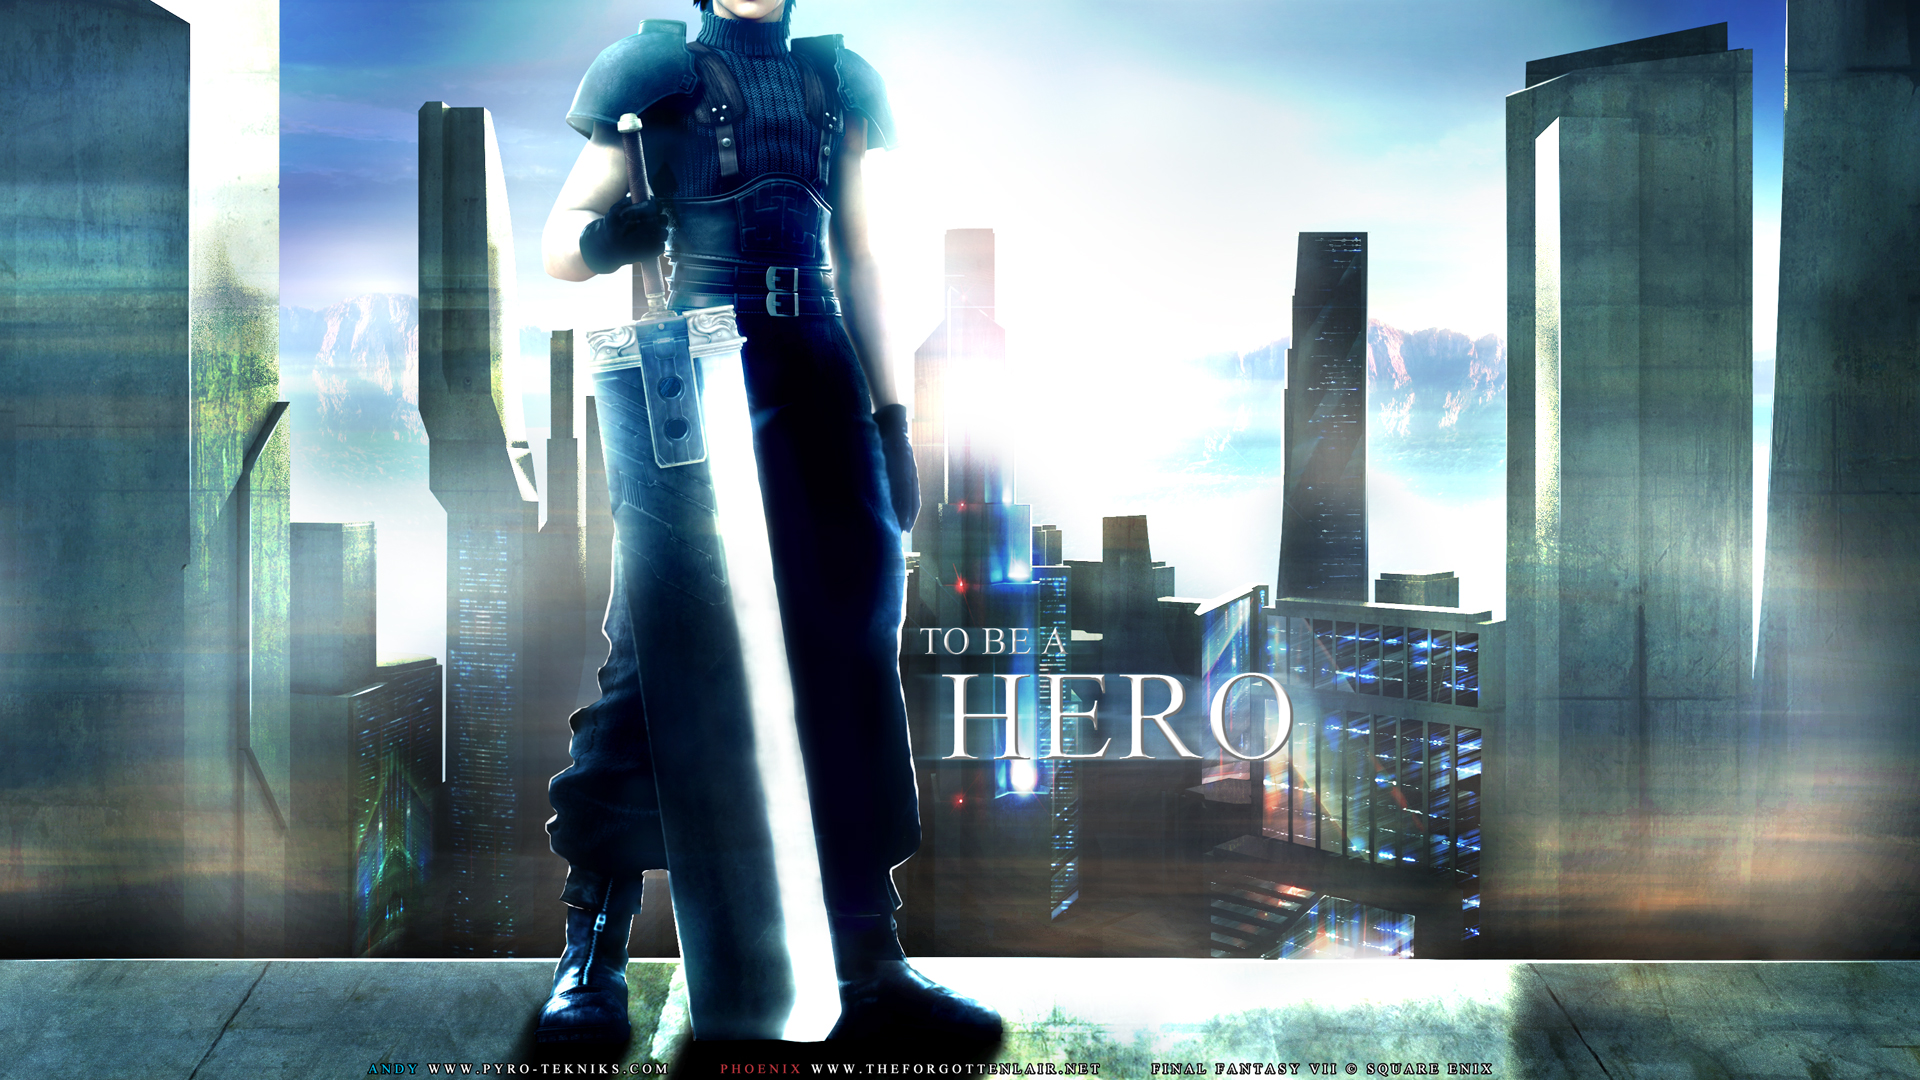 Video Game Crisis Core: Final Fantasy VII HD Wallpaper | Background Image